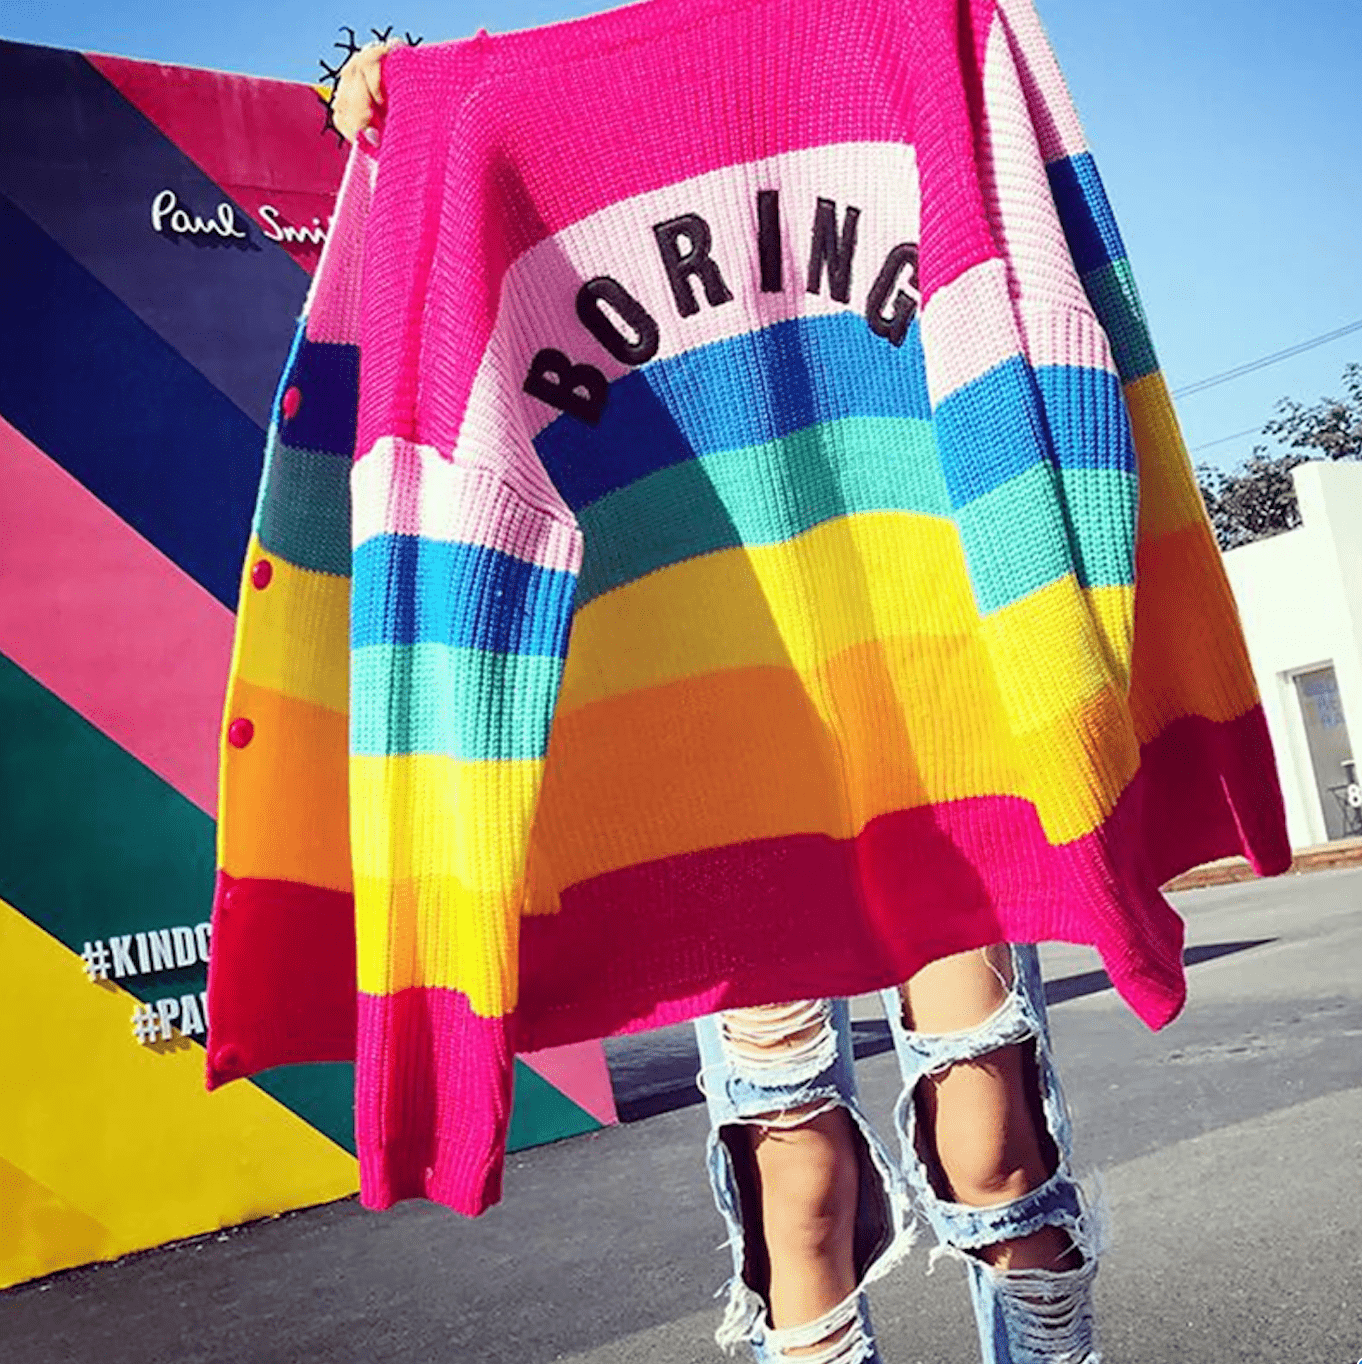 BORING Rainbow Striped Cardigan Sweater - Rose Gold Co. Shop